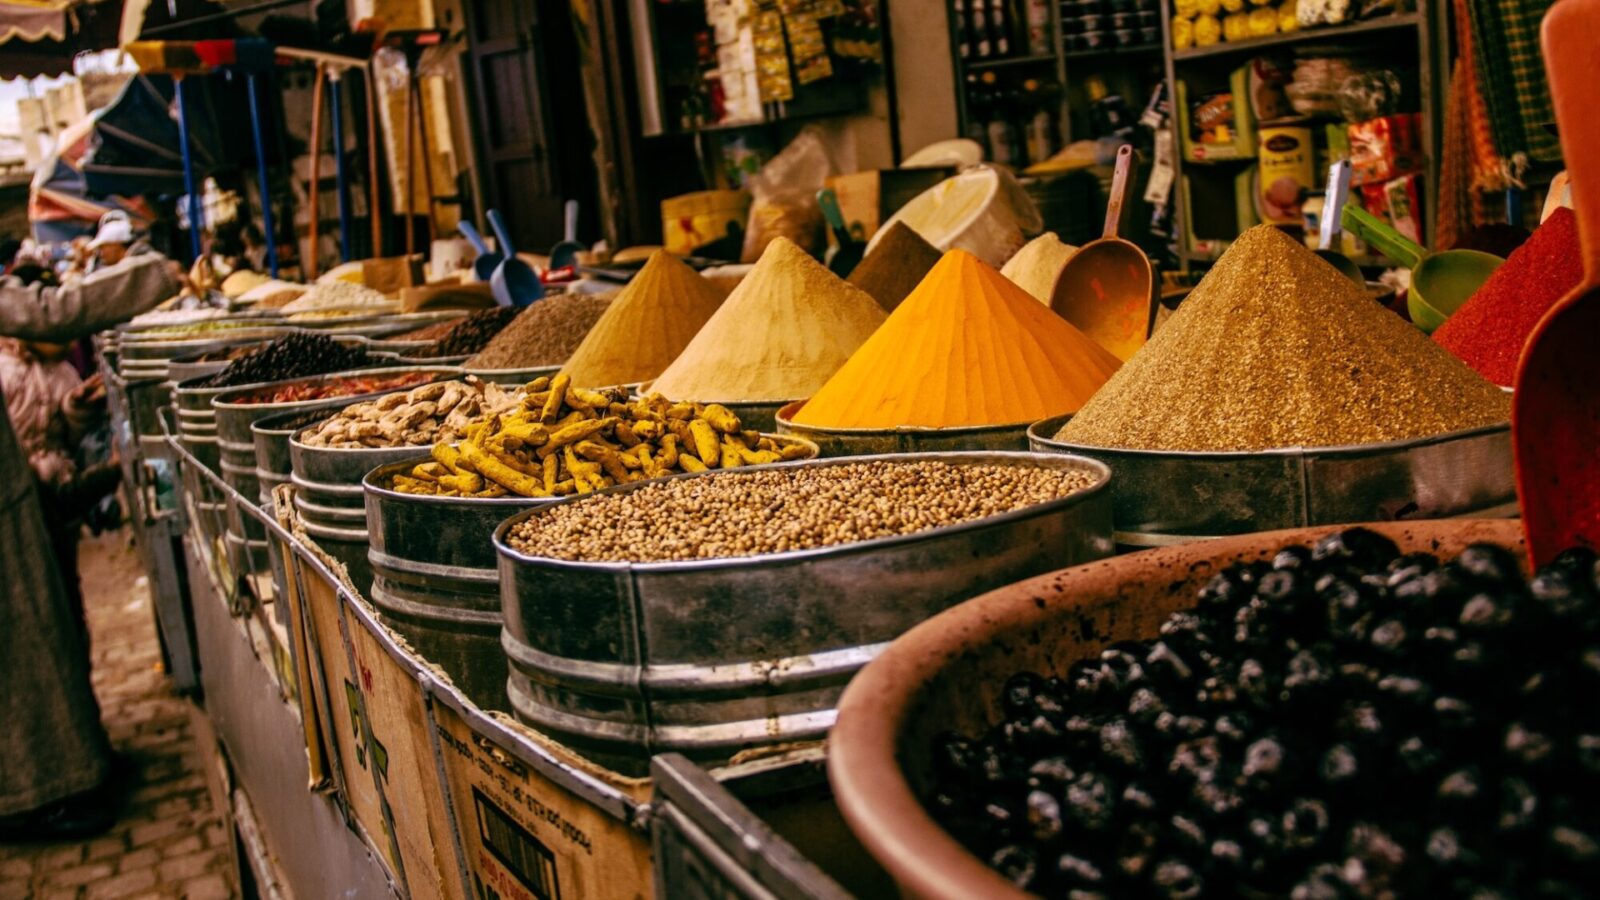 Spice market in Morocco